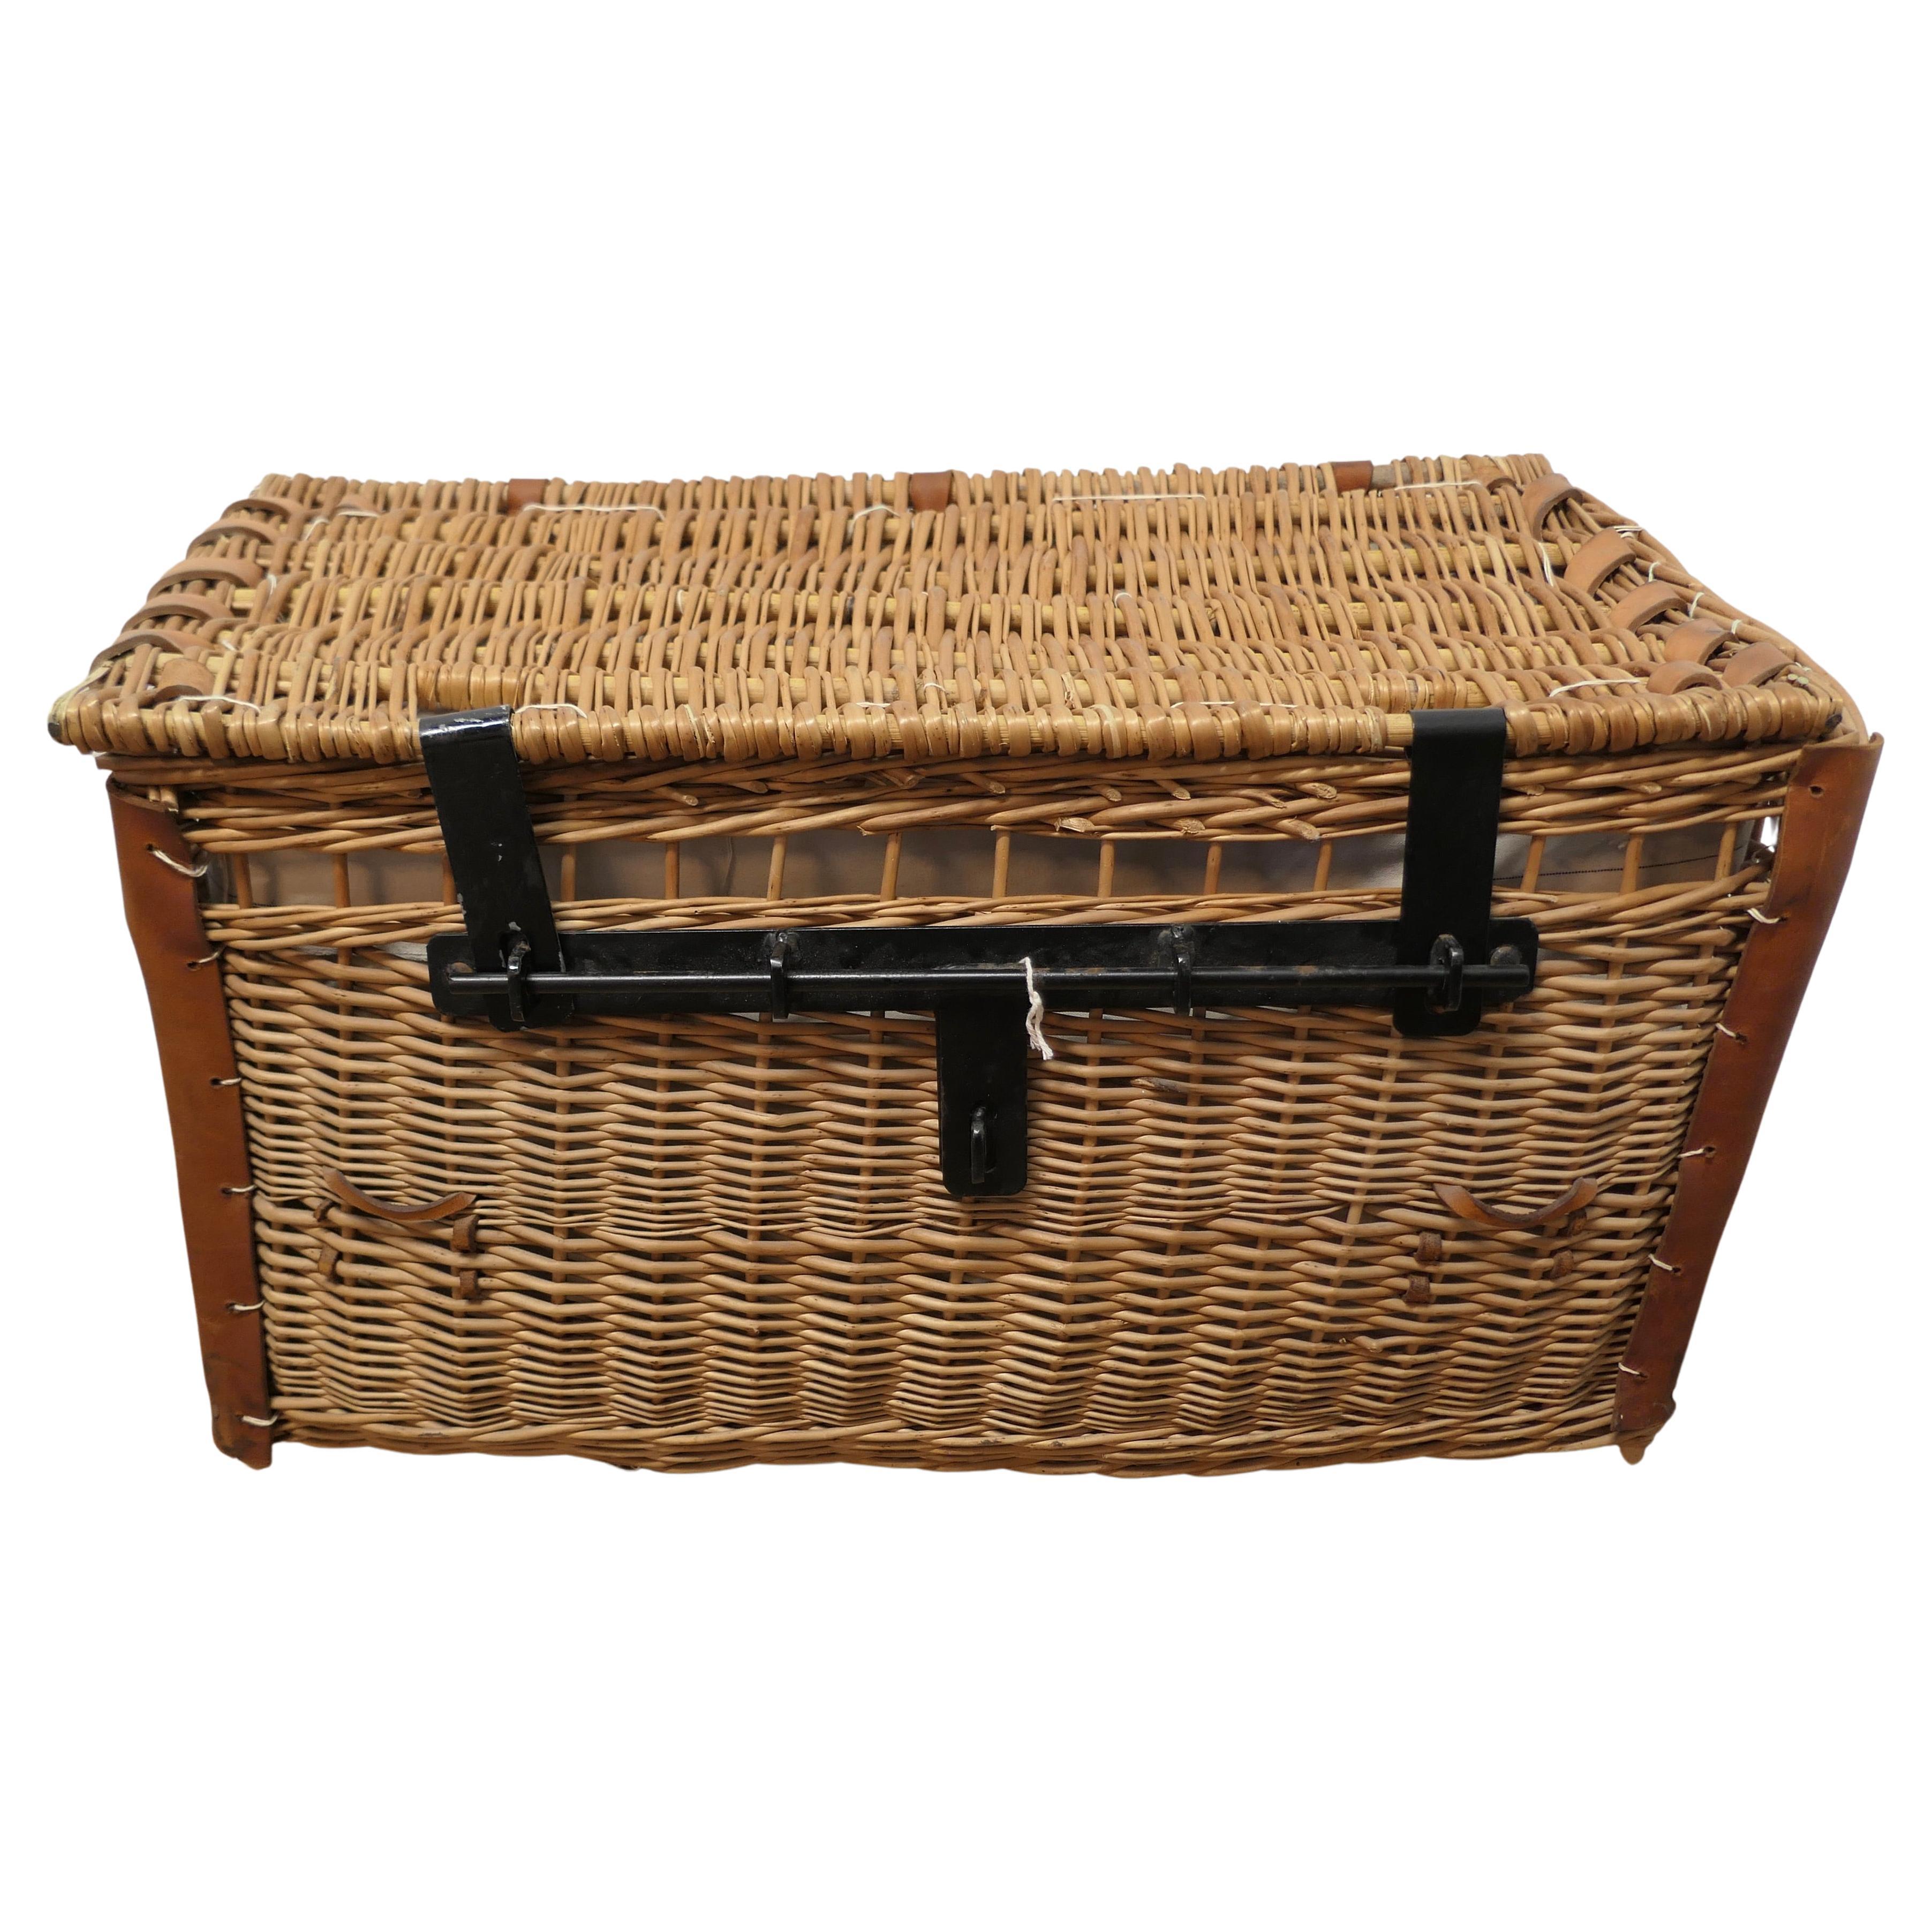 Antique Wicker Laundry Basket or Linen Hamper   